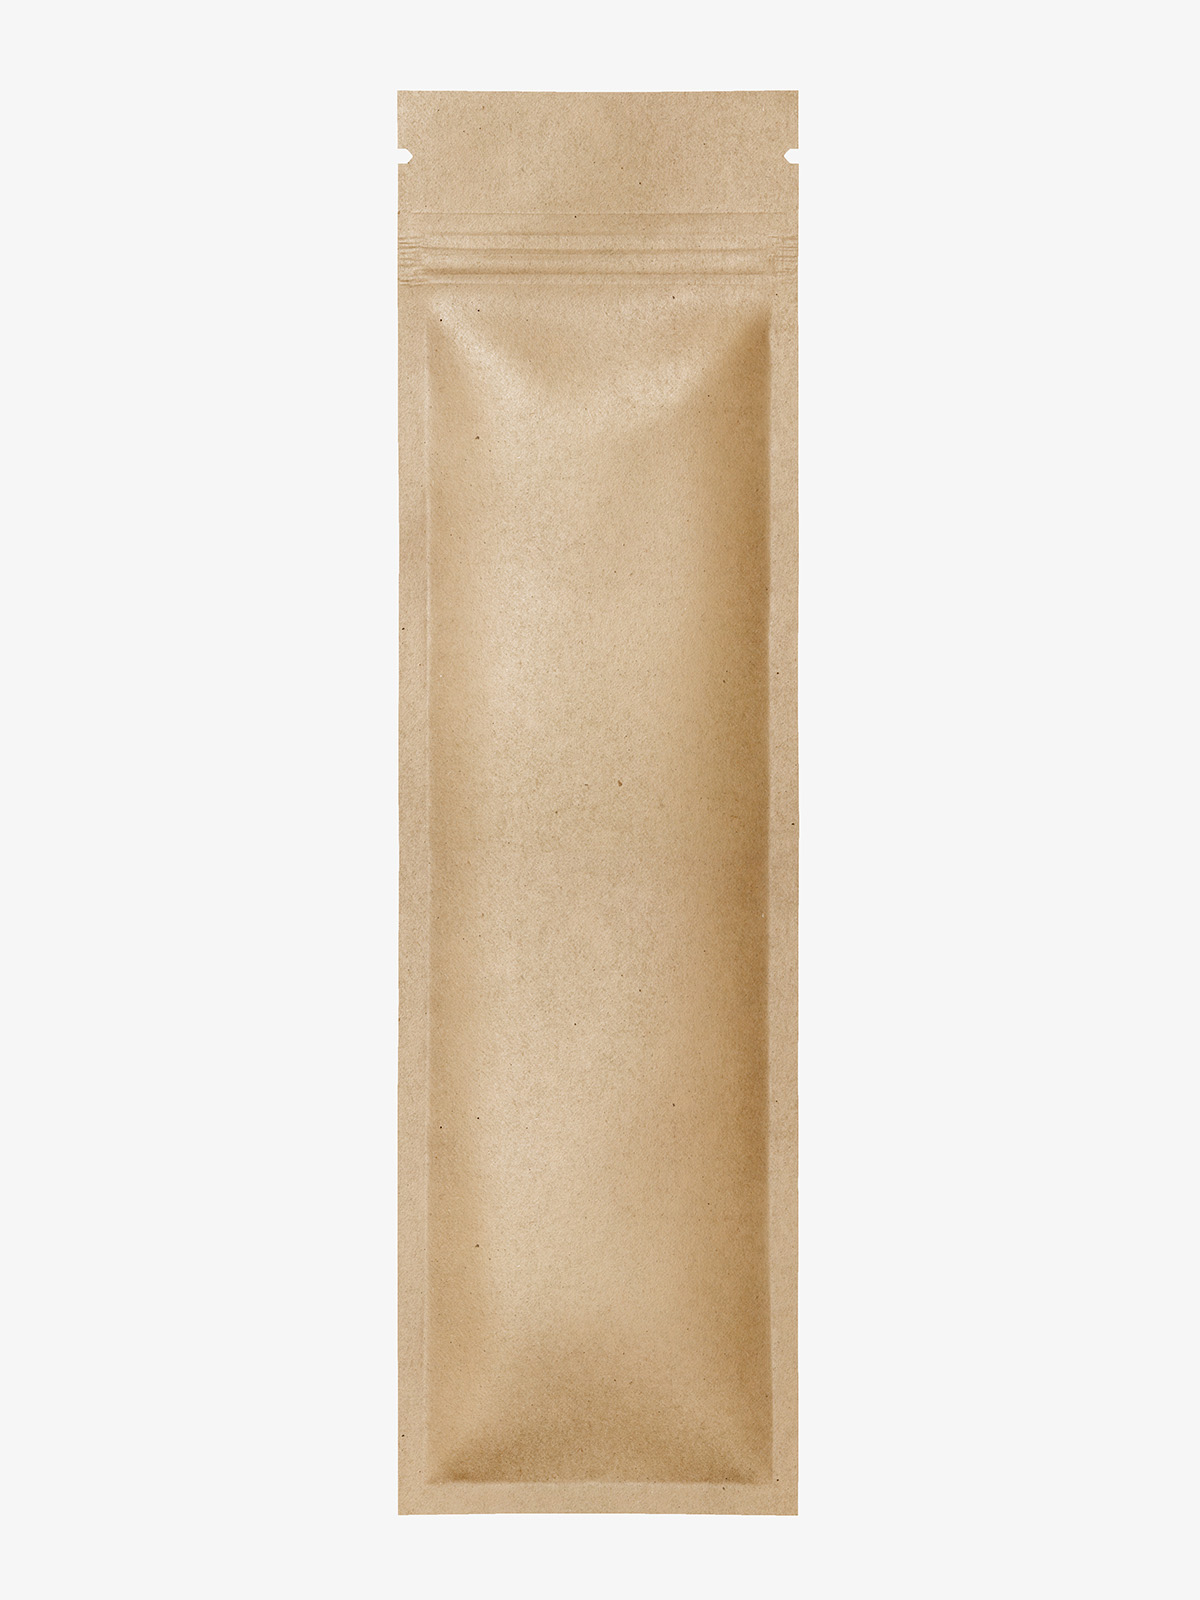 Download Kraft paper pouch mockup - Smarty Mockups